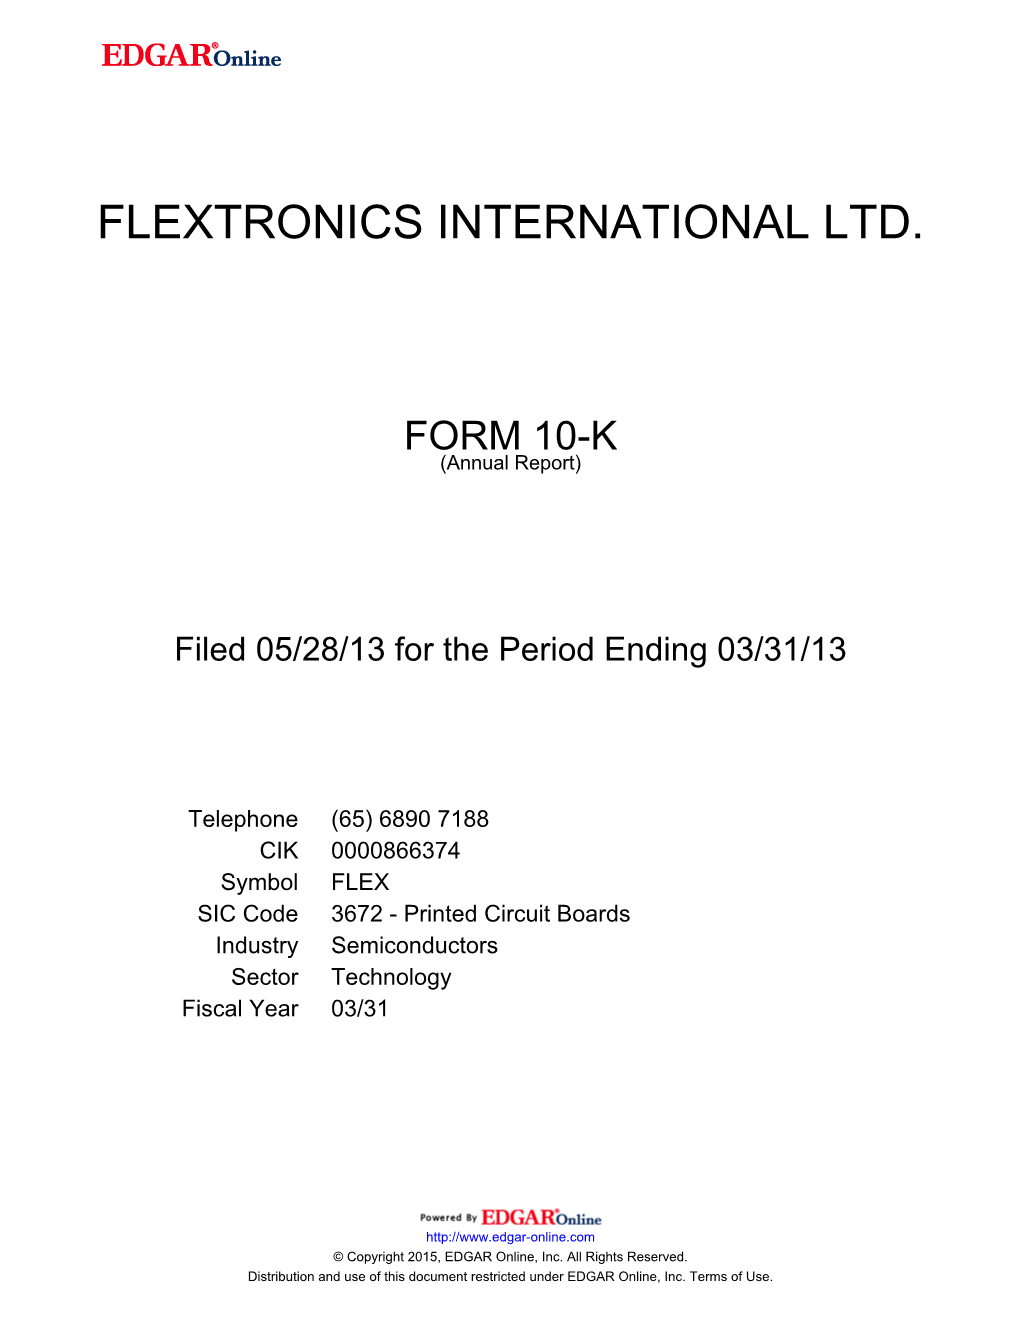 Flextronics International Ltd